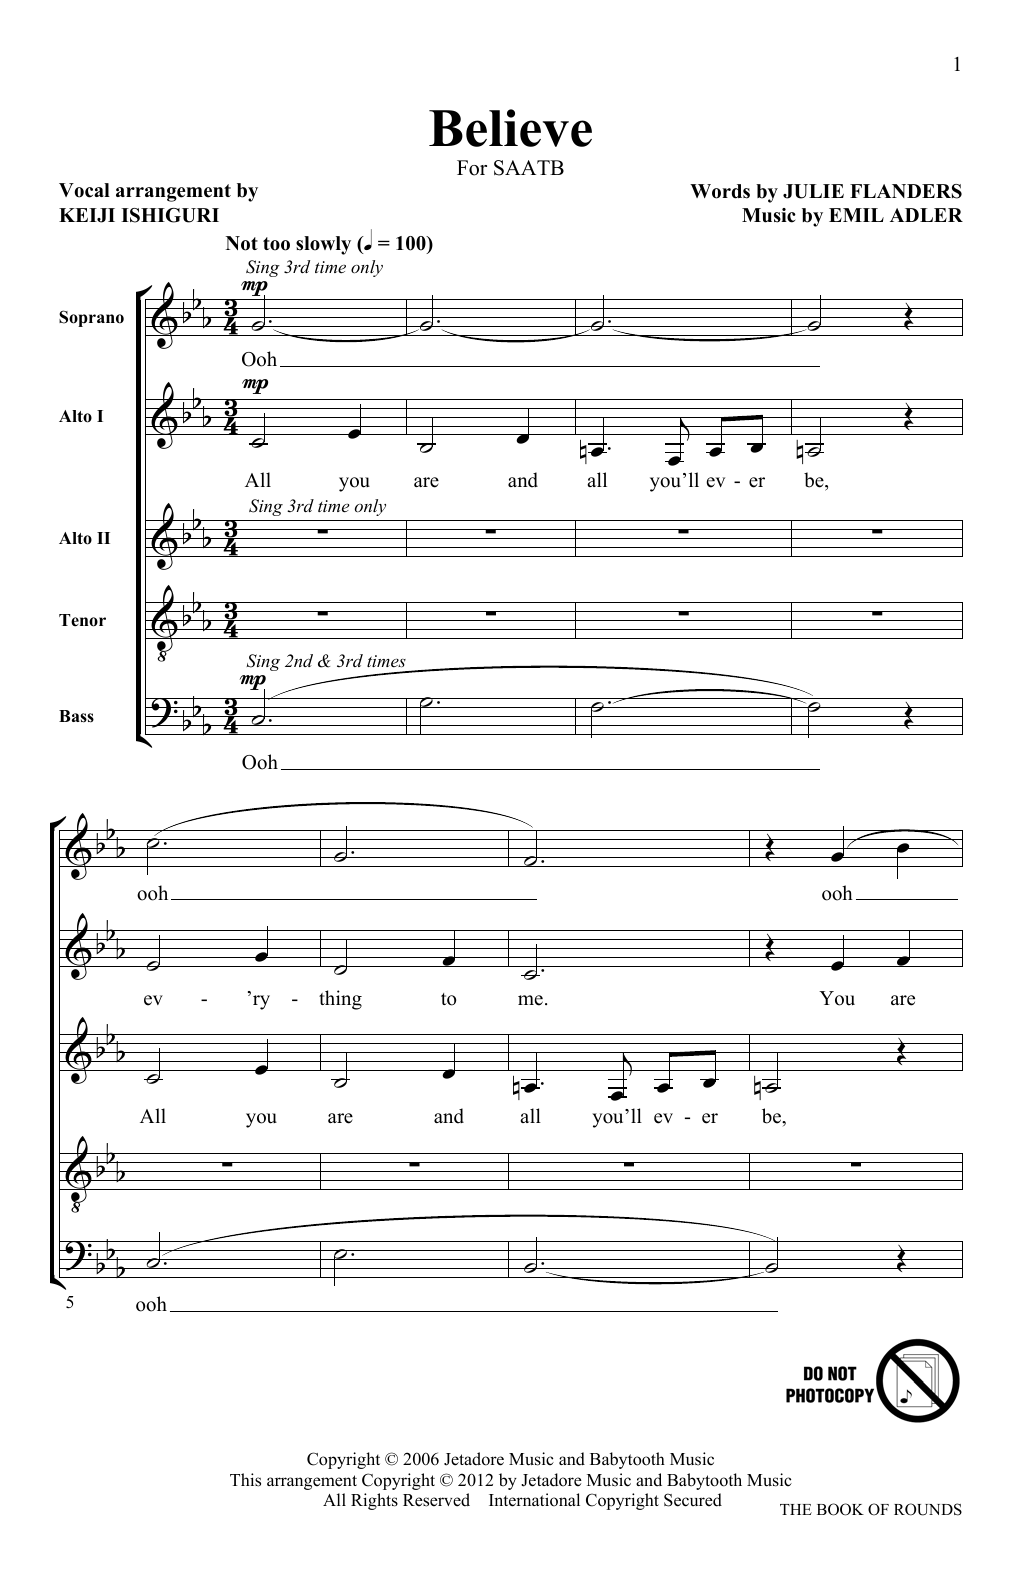 Keiji Ishiguri Believe Sheet Music Notes & Chords for SATB - Download or Print PDF